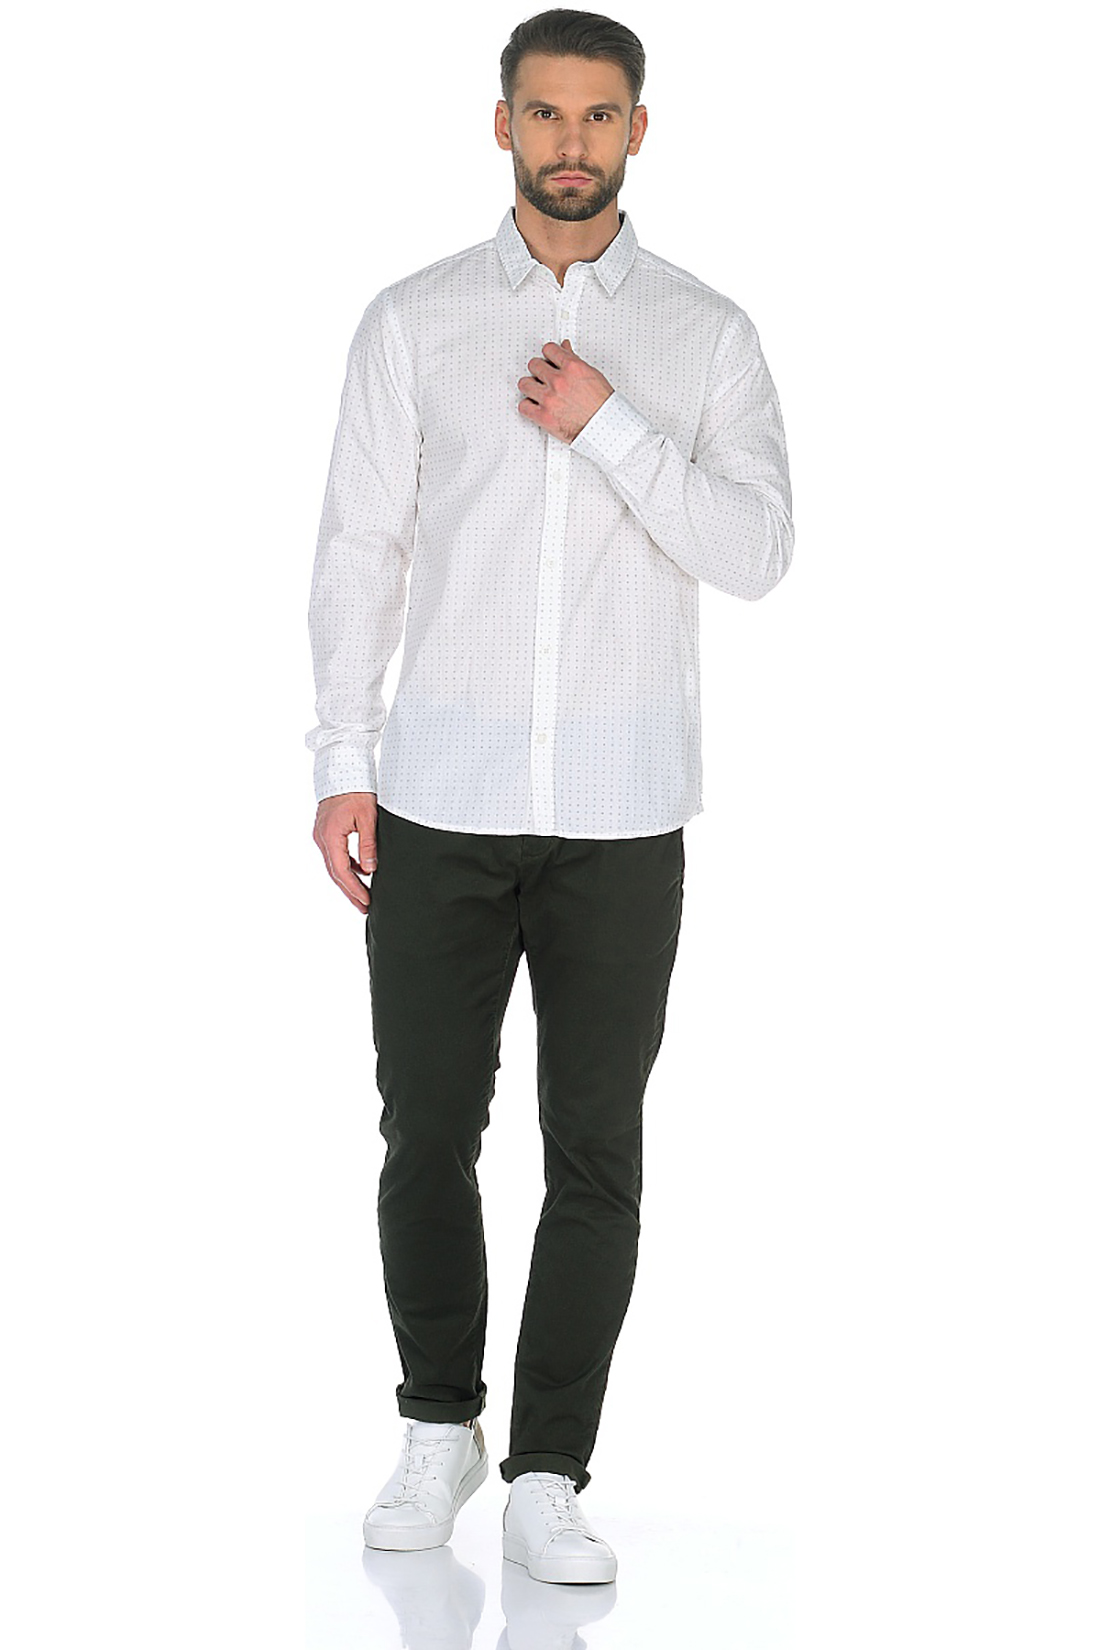 Рубашка с геометрическим узором (арт. baon B668015), размер XL, цвет white printed#белый Рубашка с геометрическим узором (арт. baon B668015) - фото 3